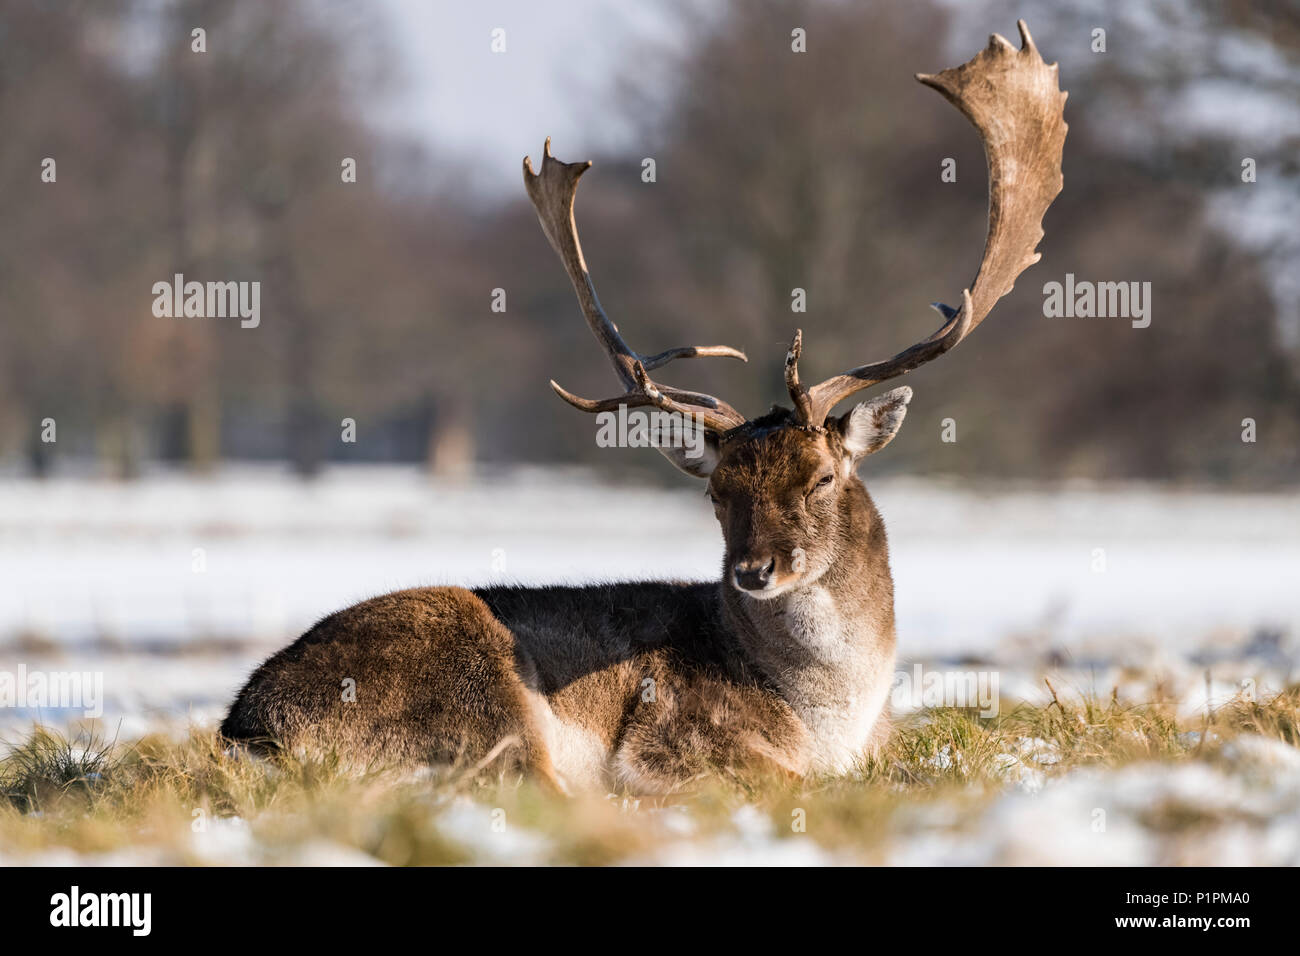 Red Deer (Cervus elaphus) réside dans l'herbe enneigée ; London, England Banque D'Images